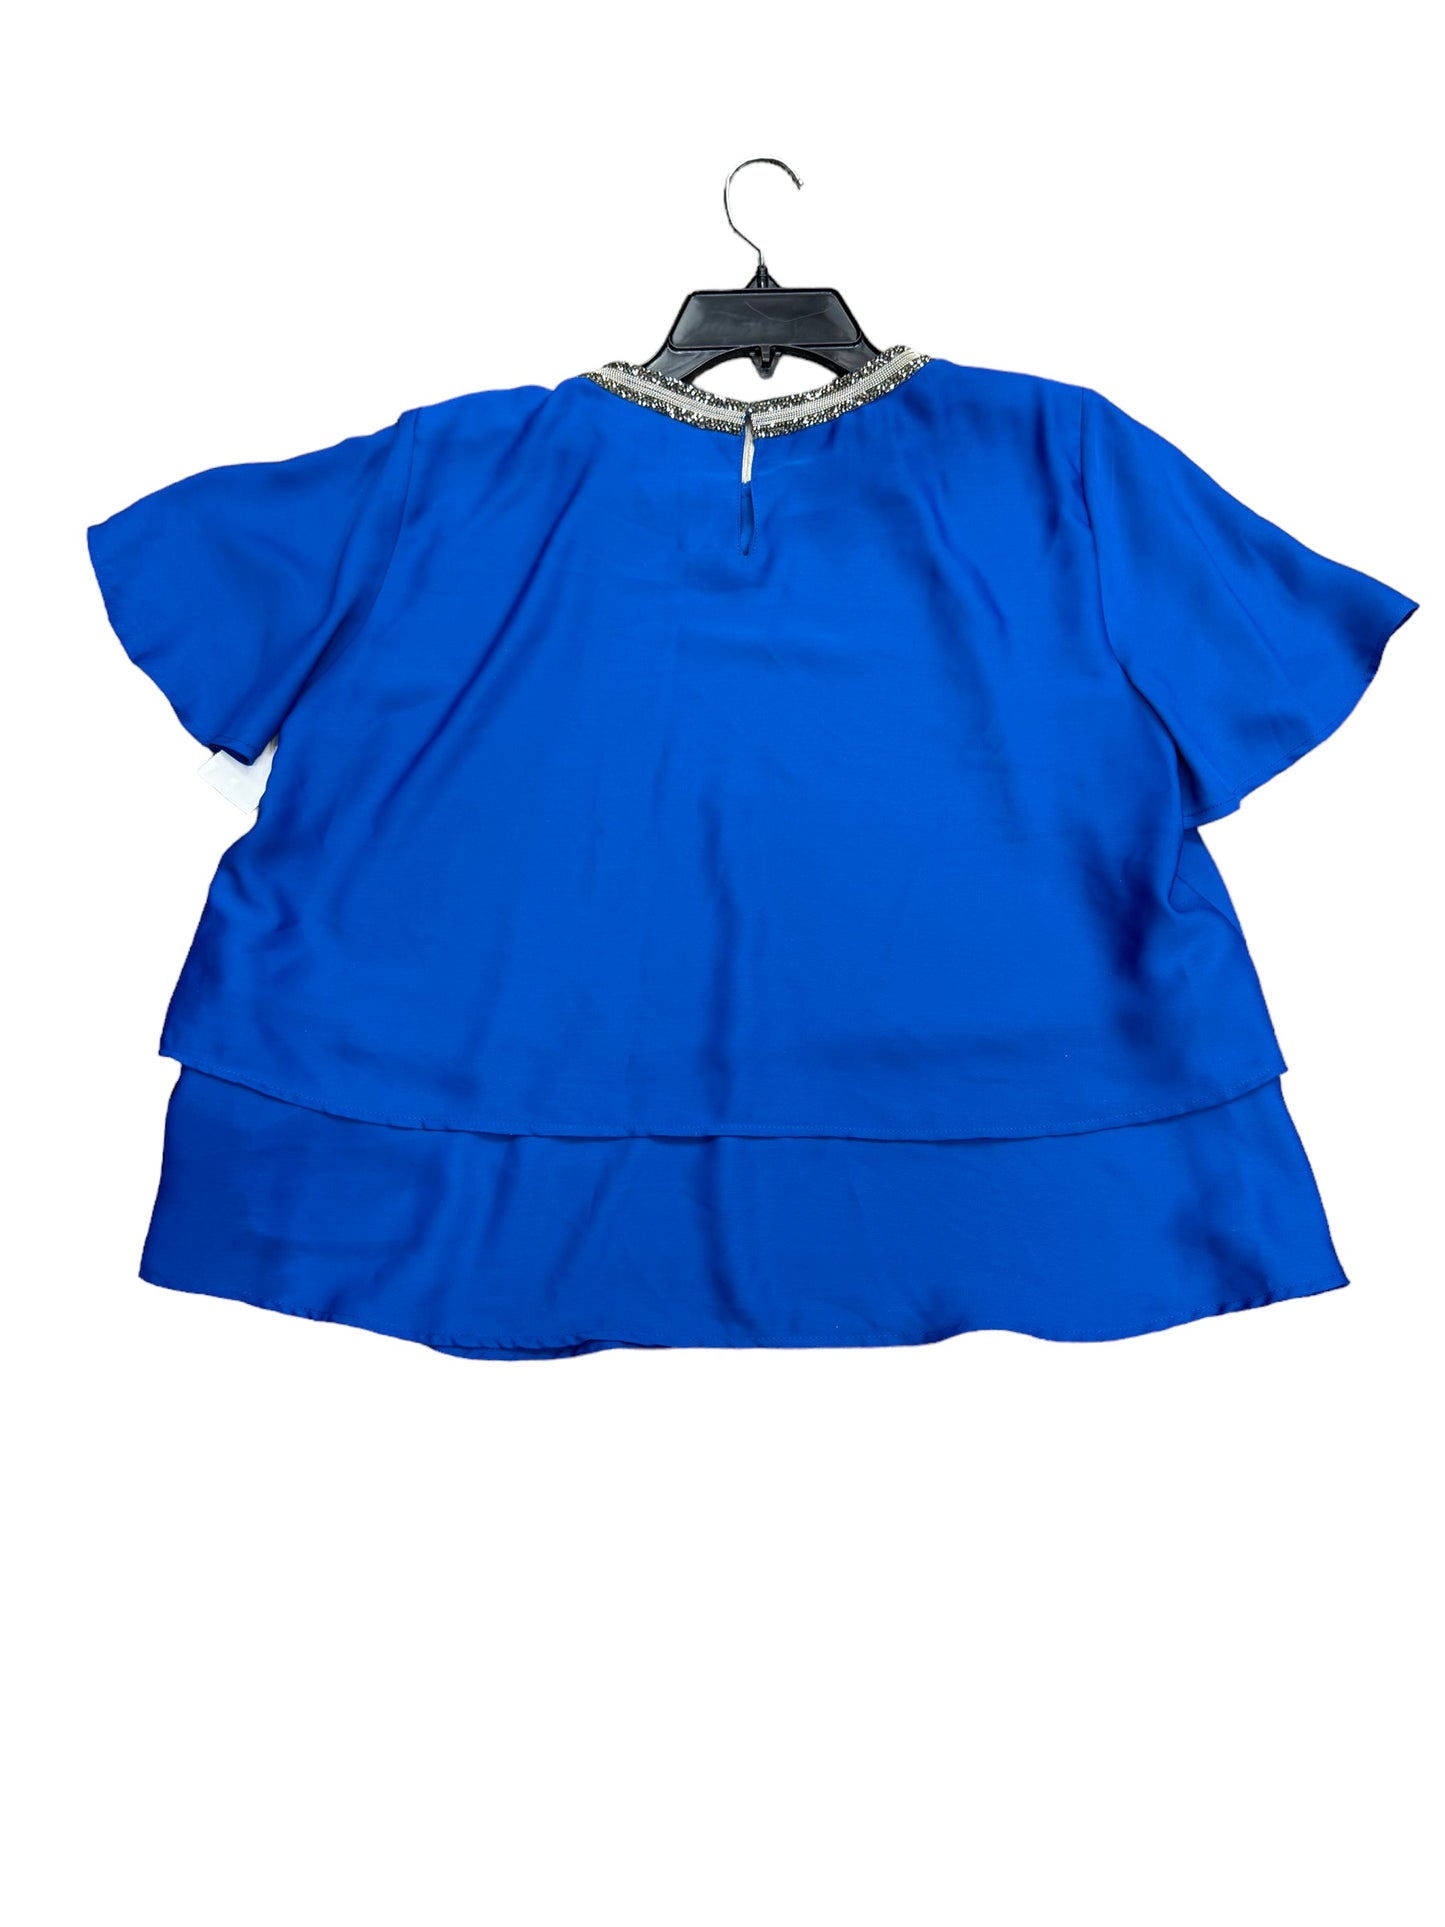 Blouse Short Sleeve By Zara Basic  Size: M